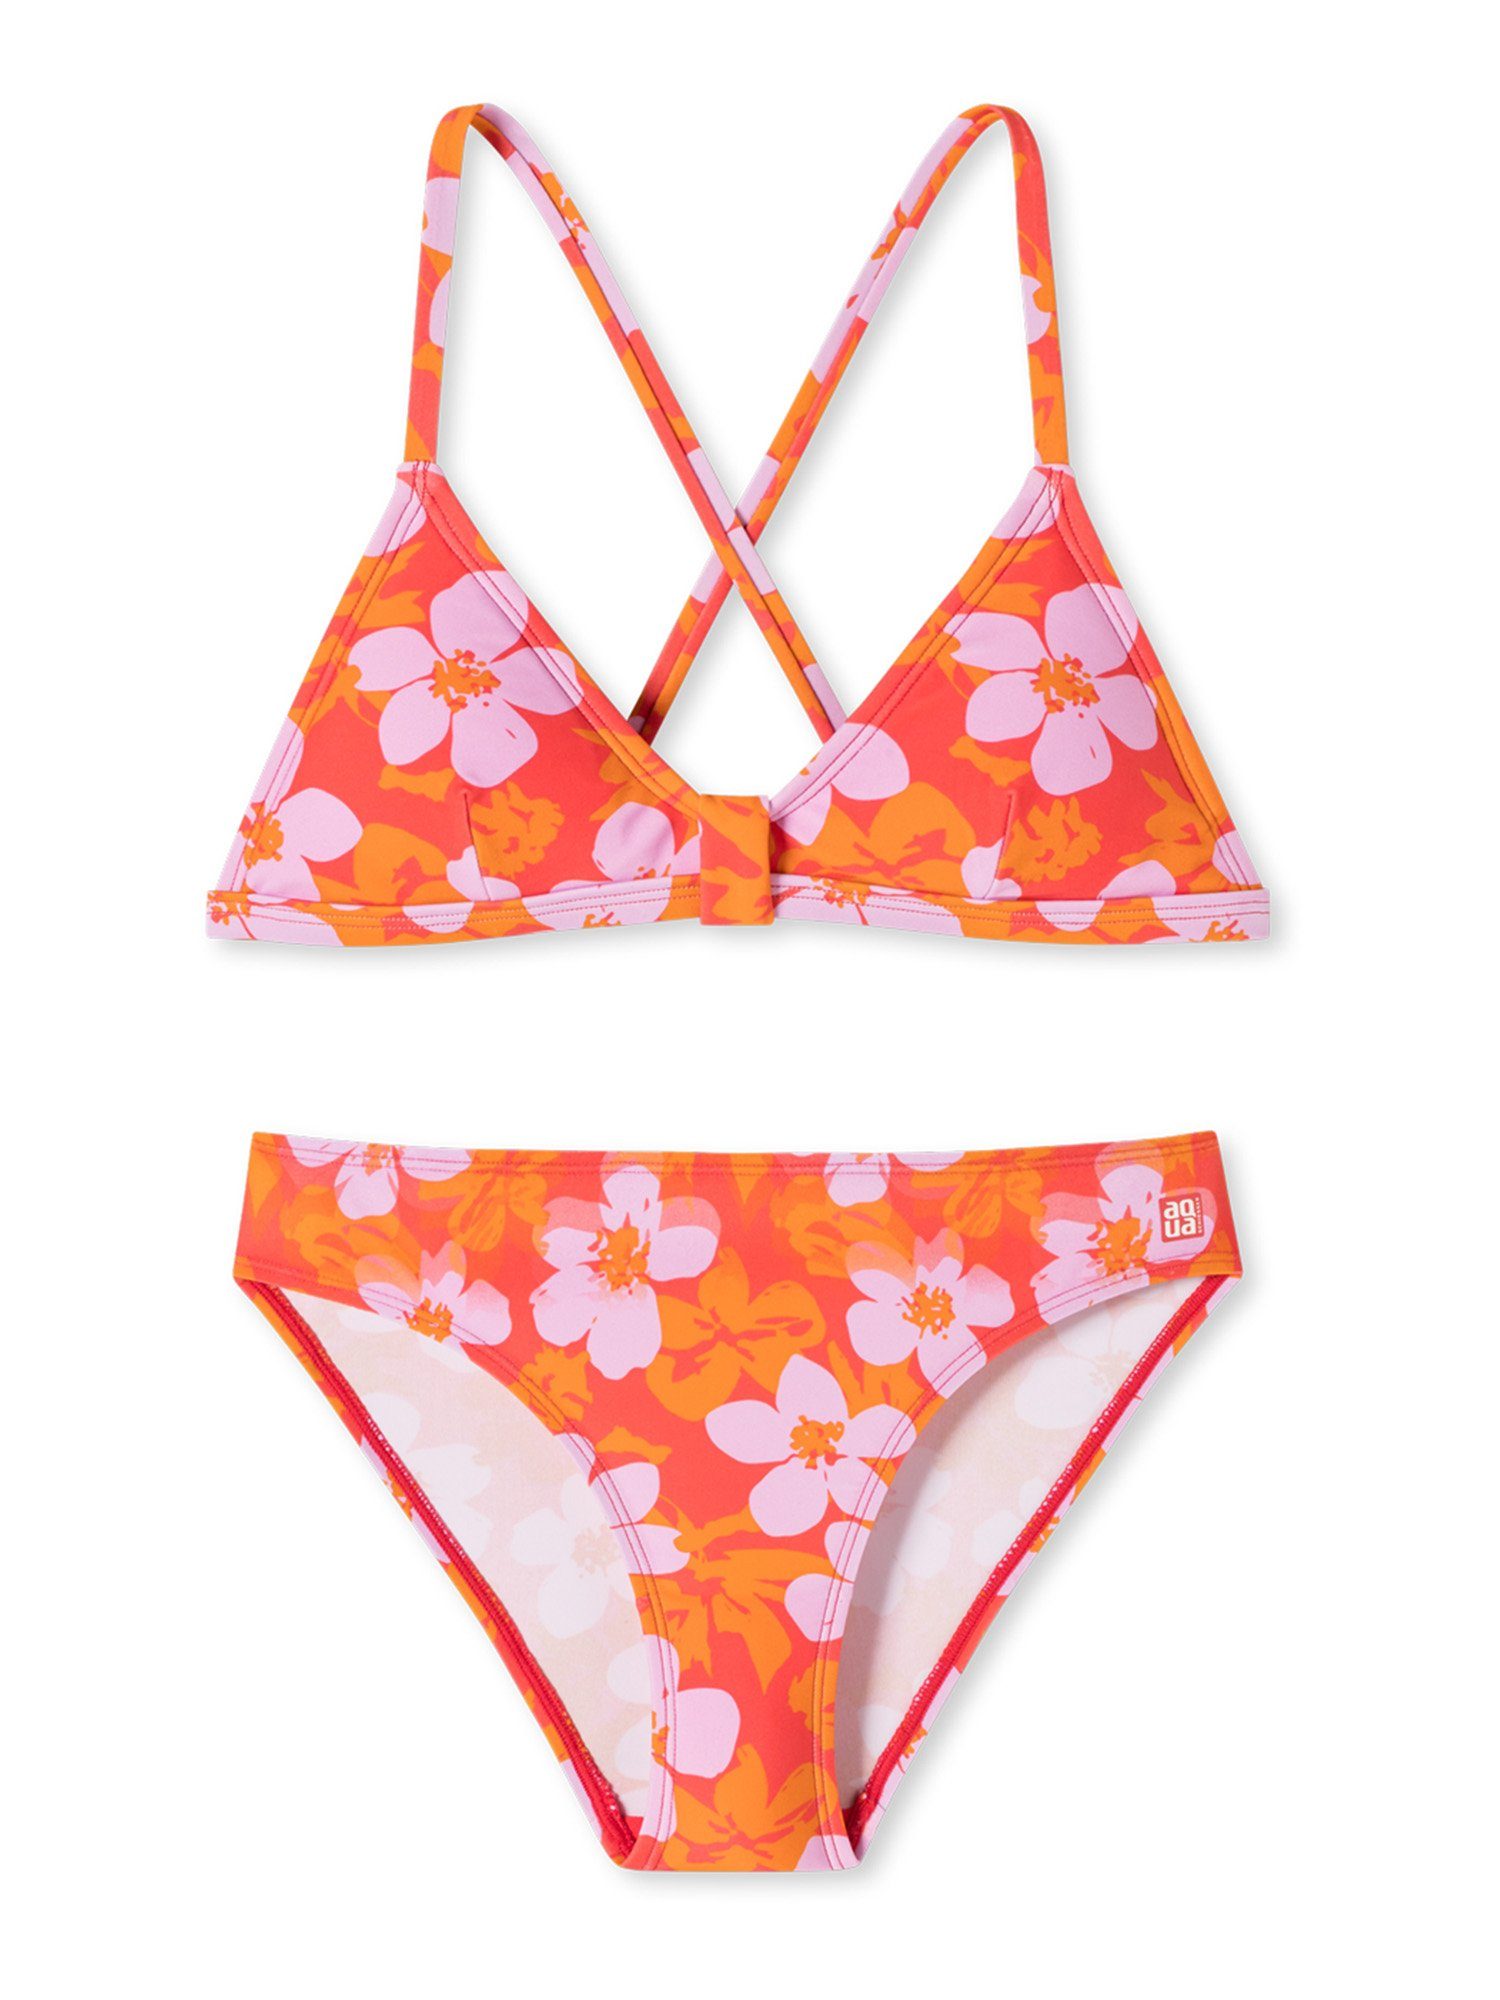 Aqua - oberteil rot Triangel-Bikini (2-St) Set bikini Girls Teen schwimm-hose Schiesser